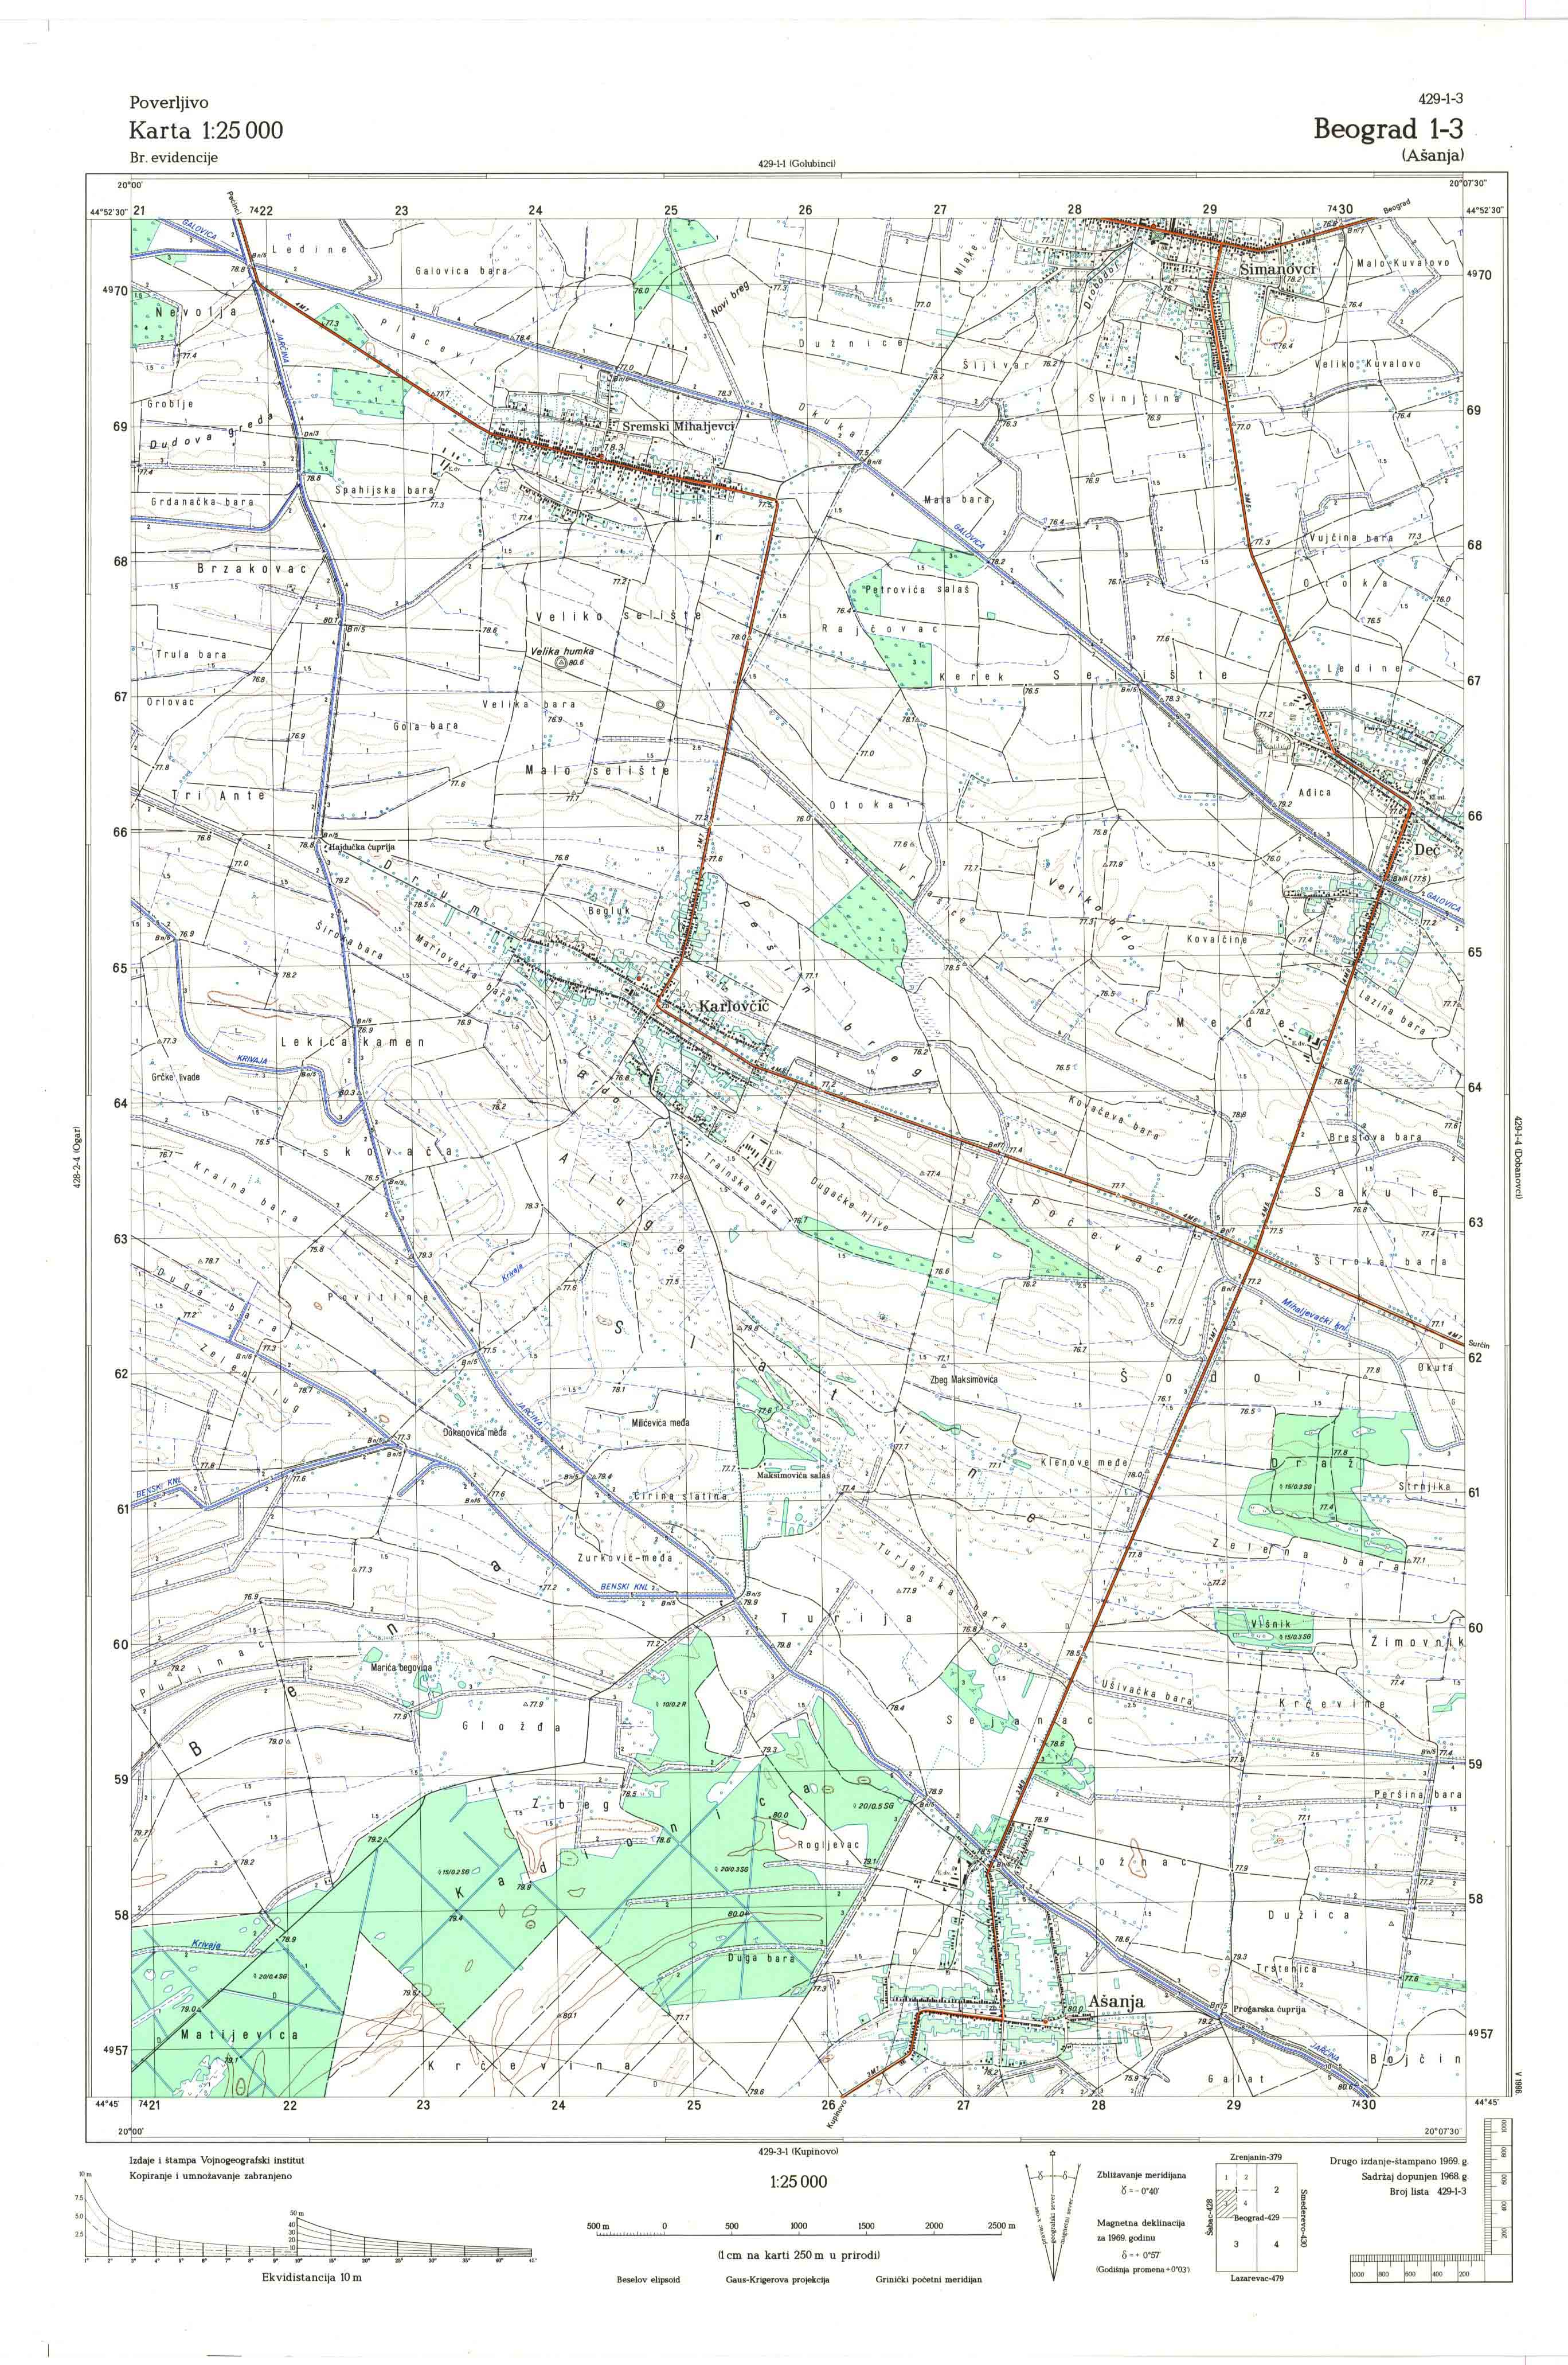  topografska karta srbije 25000 JNA  Beograd